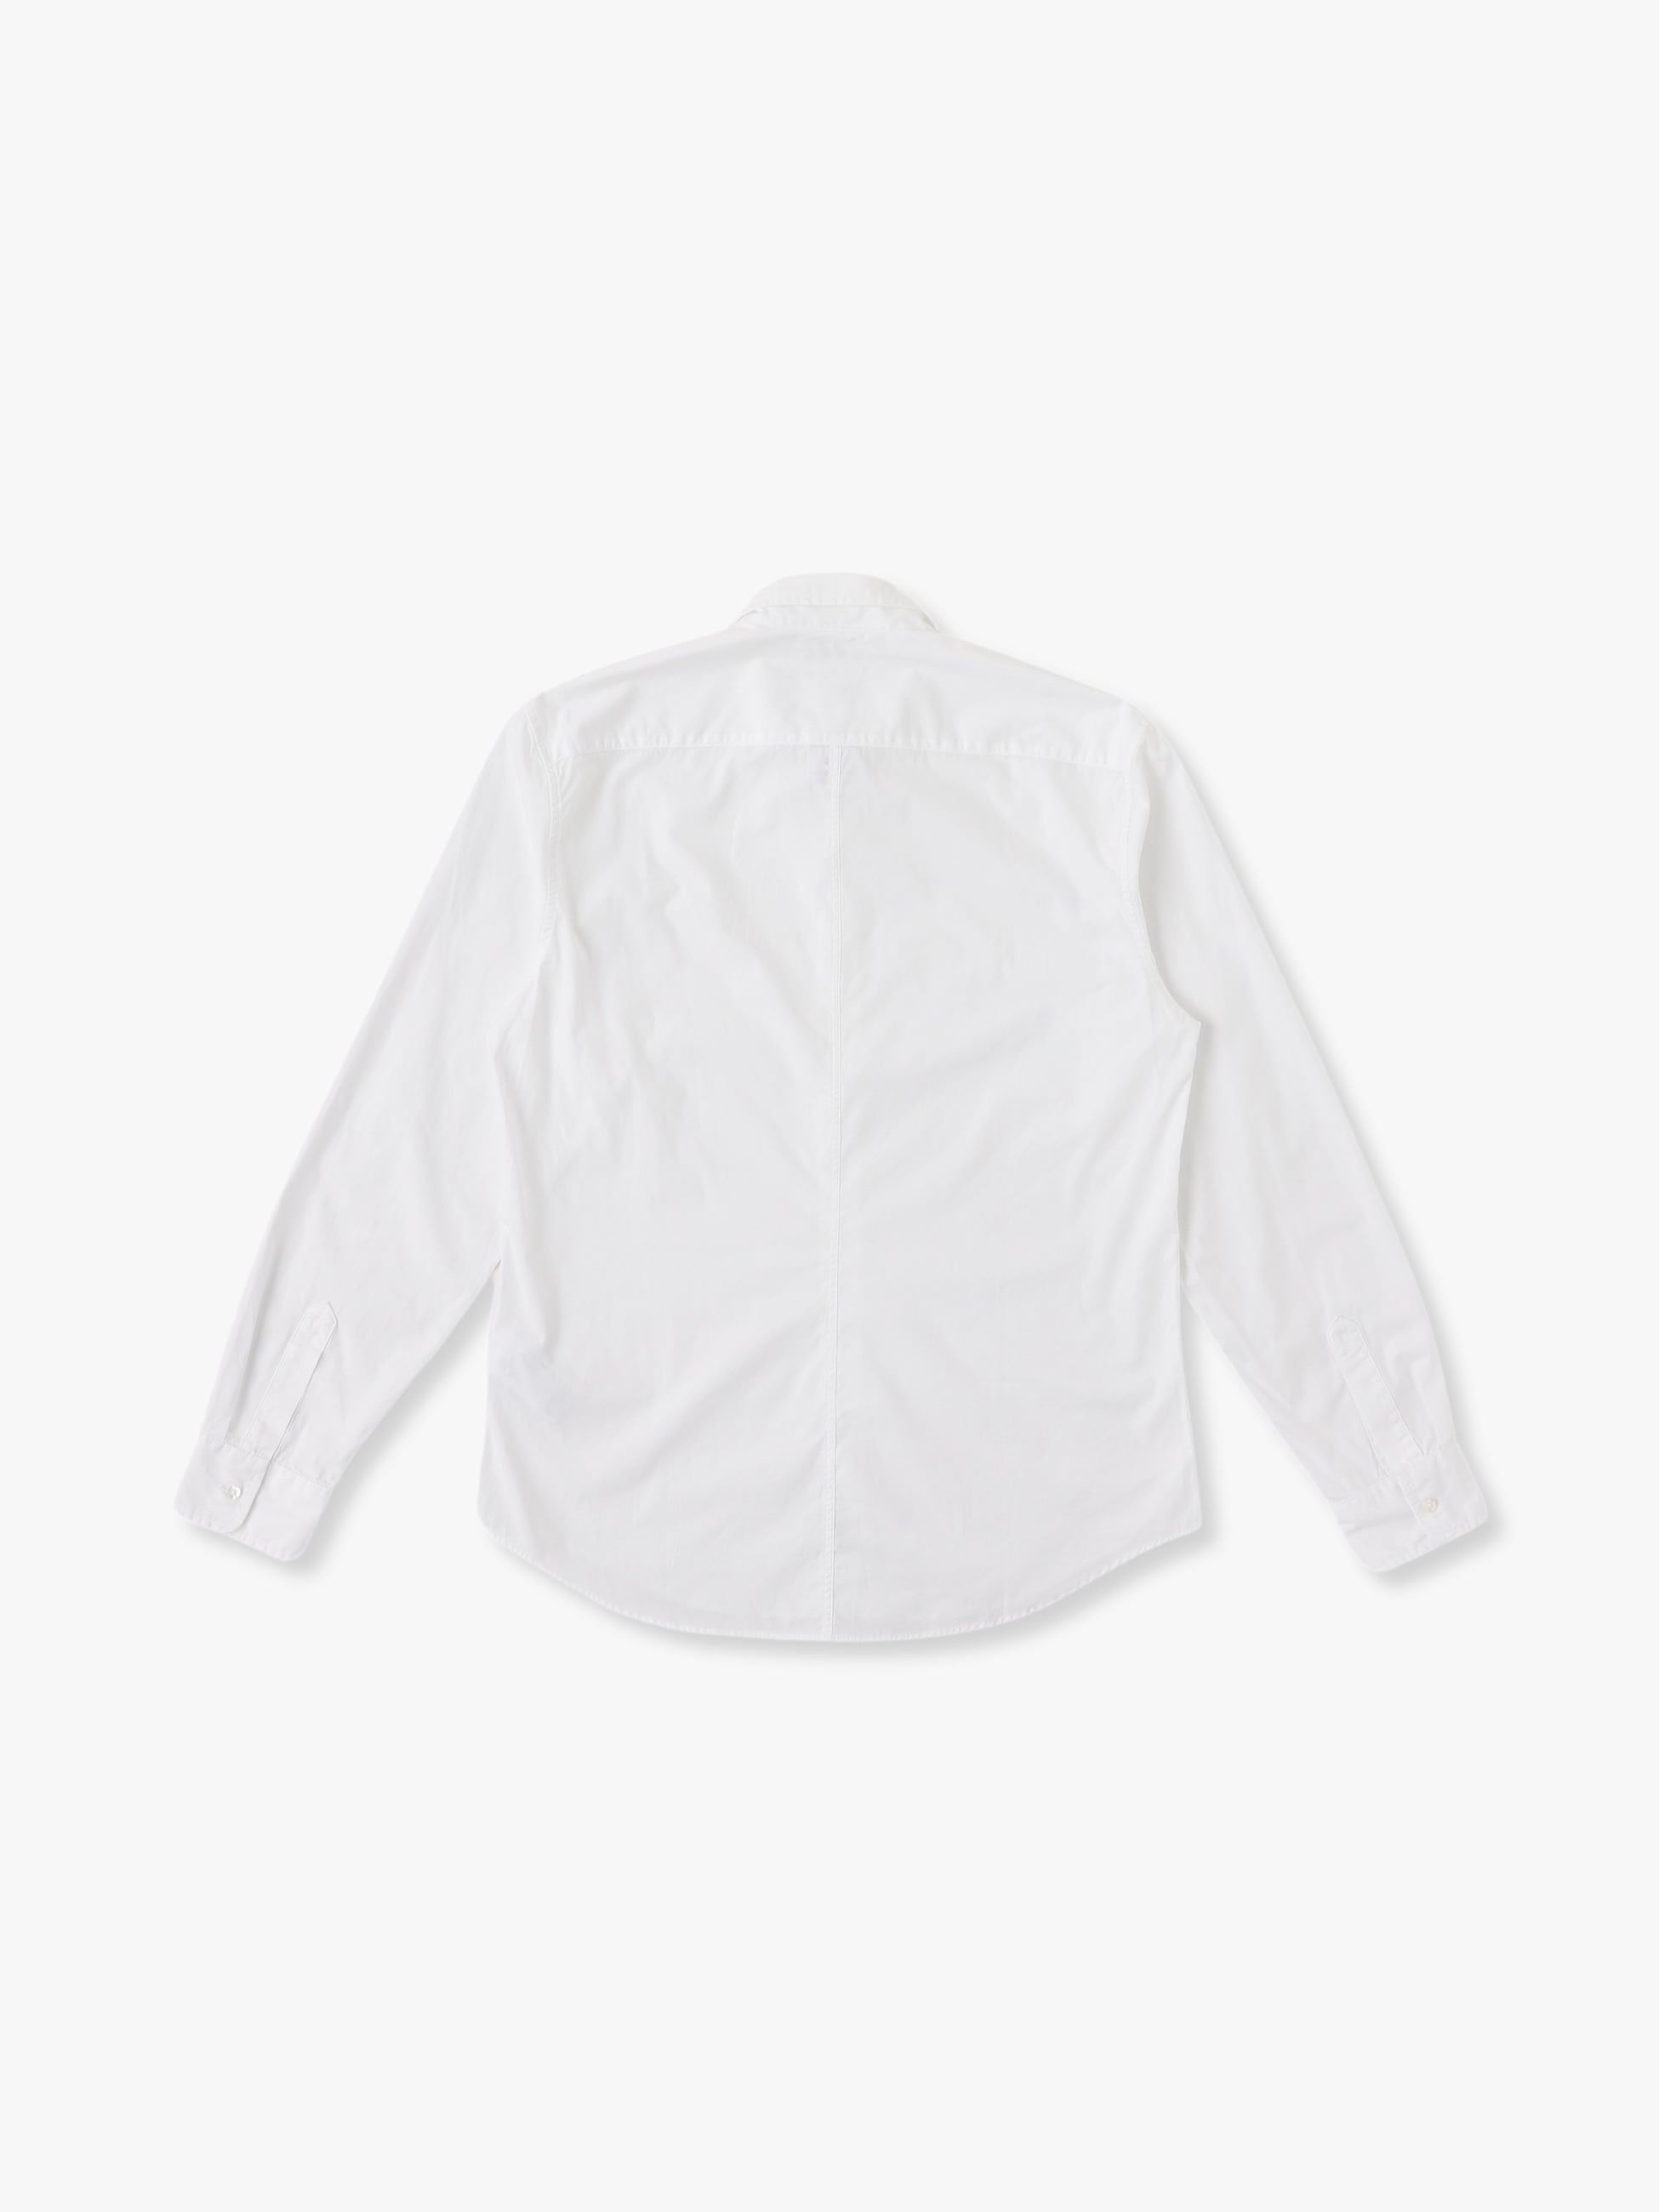 Finbar WTP Shirt 詳細画像 white 1